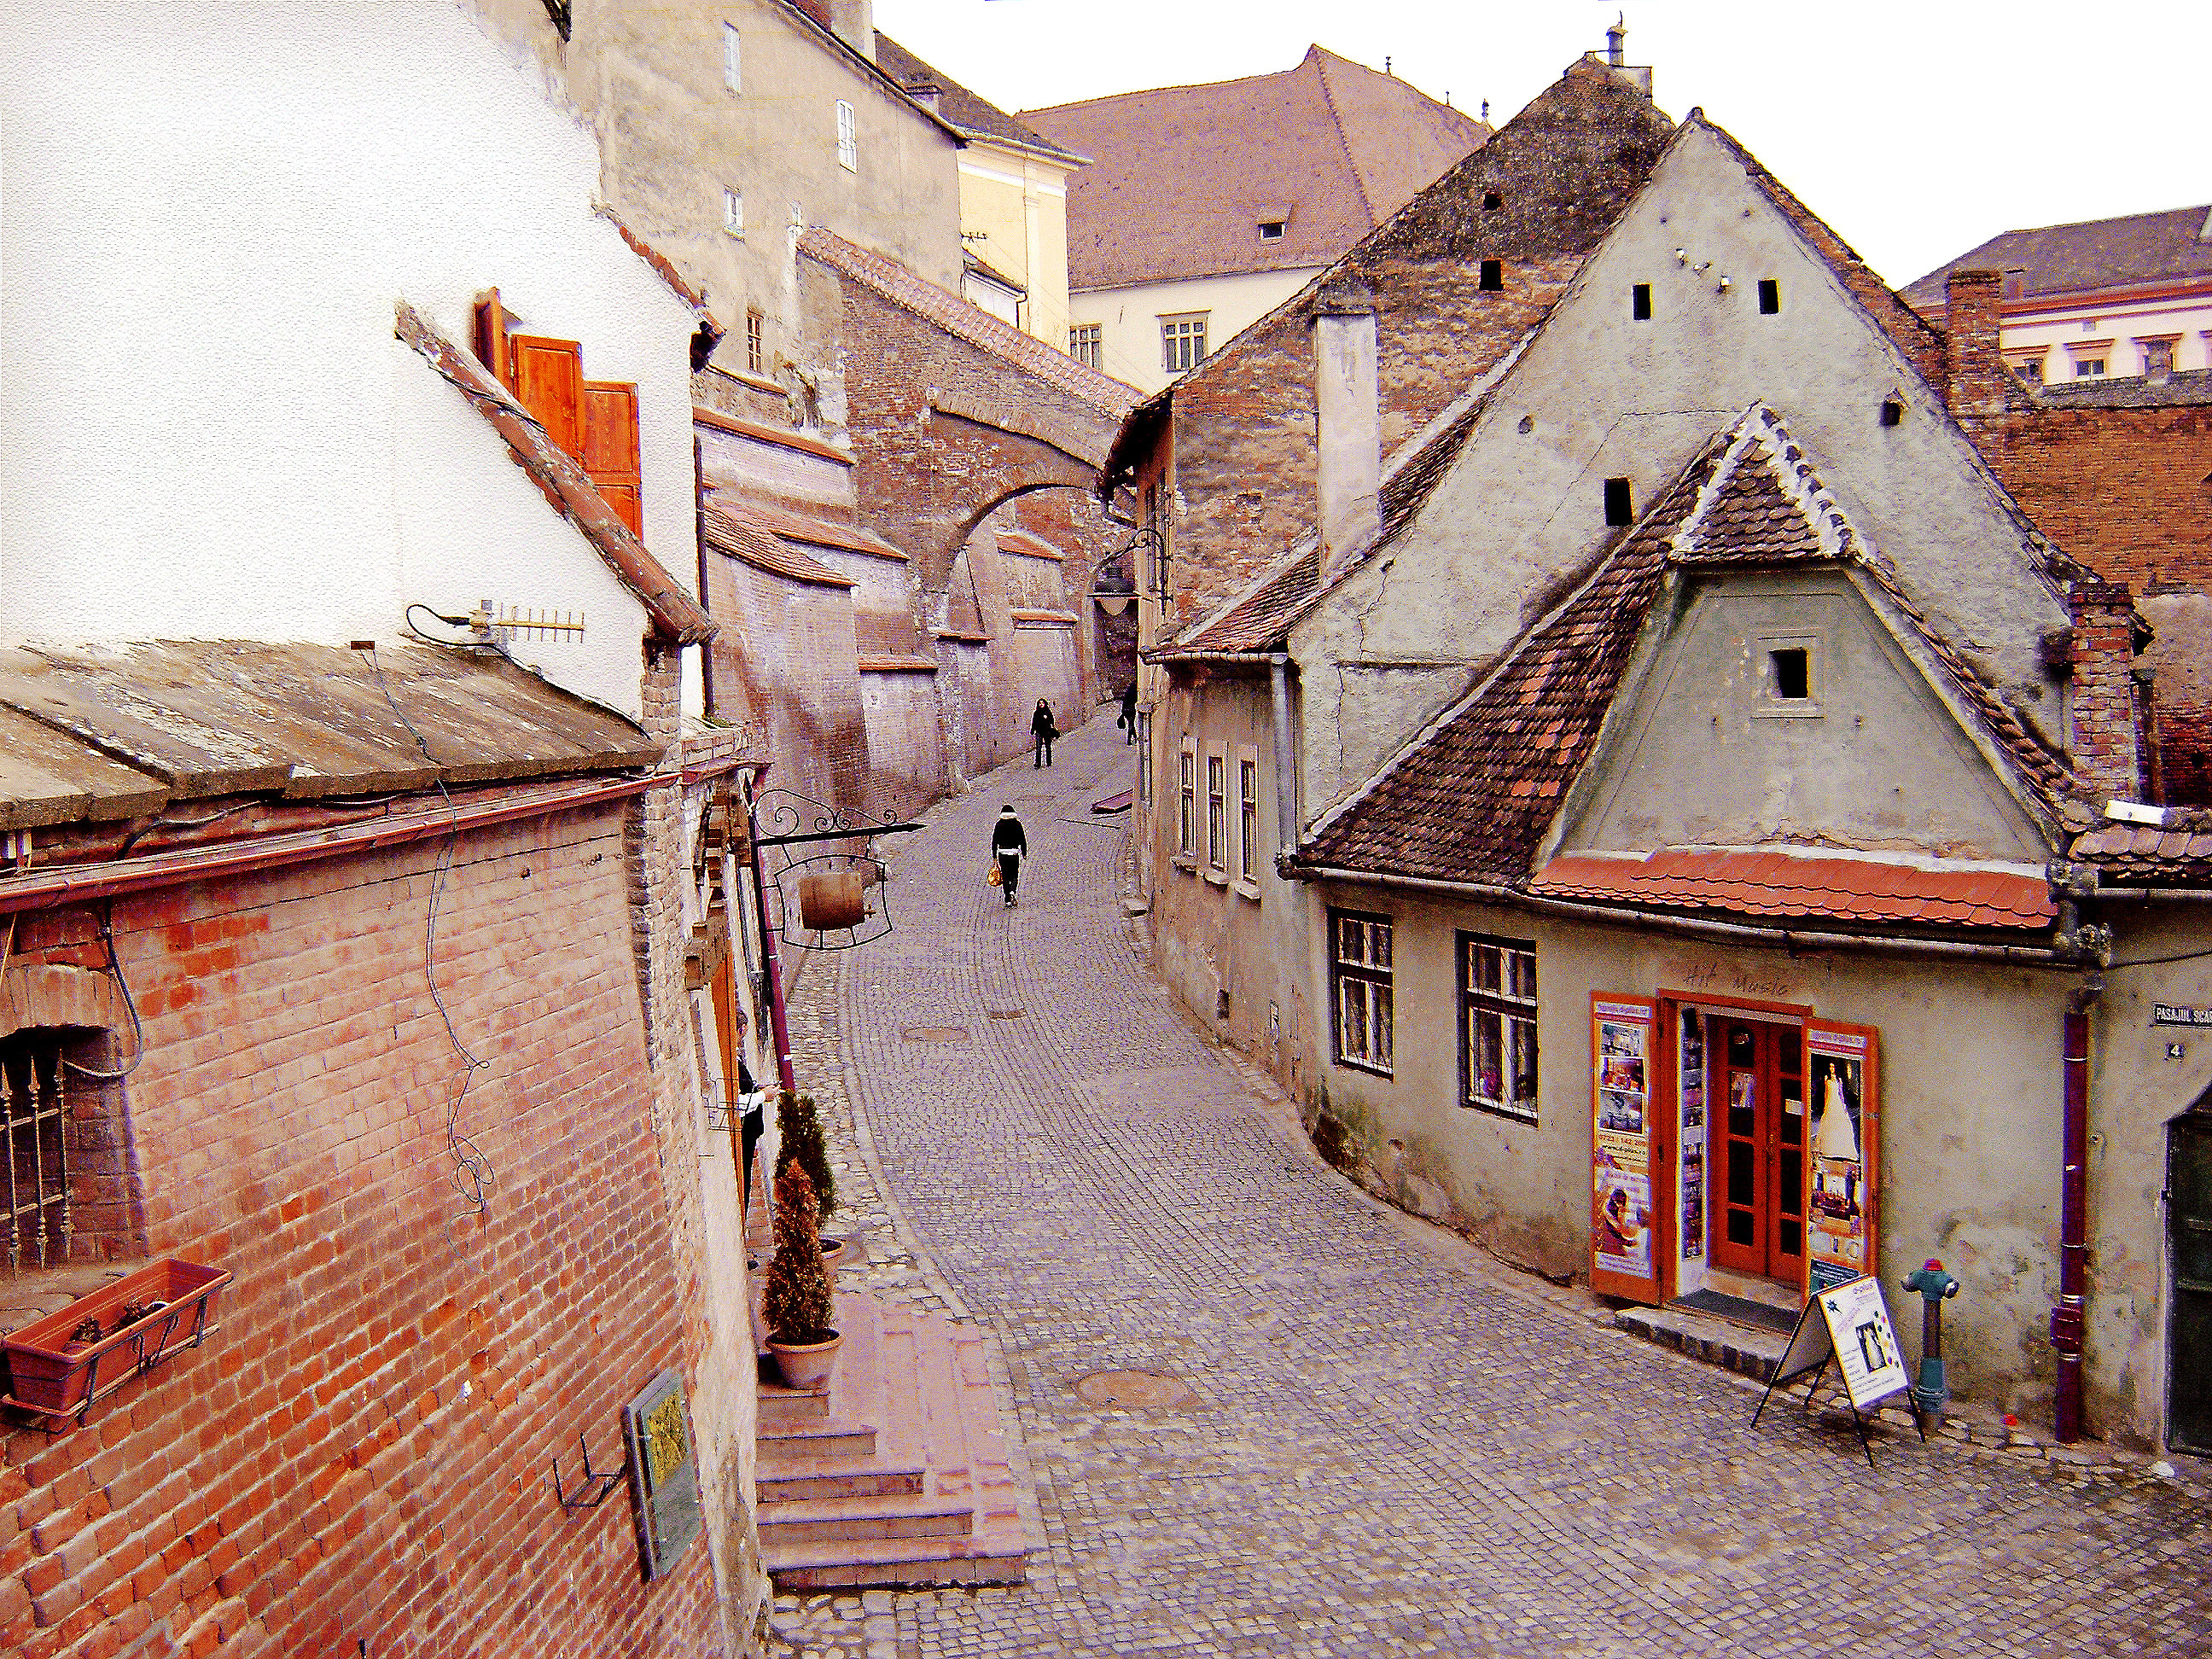 File:Sibiu (Hermannstadt, Nagyszeben) - City Hall.jpg - Wikimedia Commons